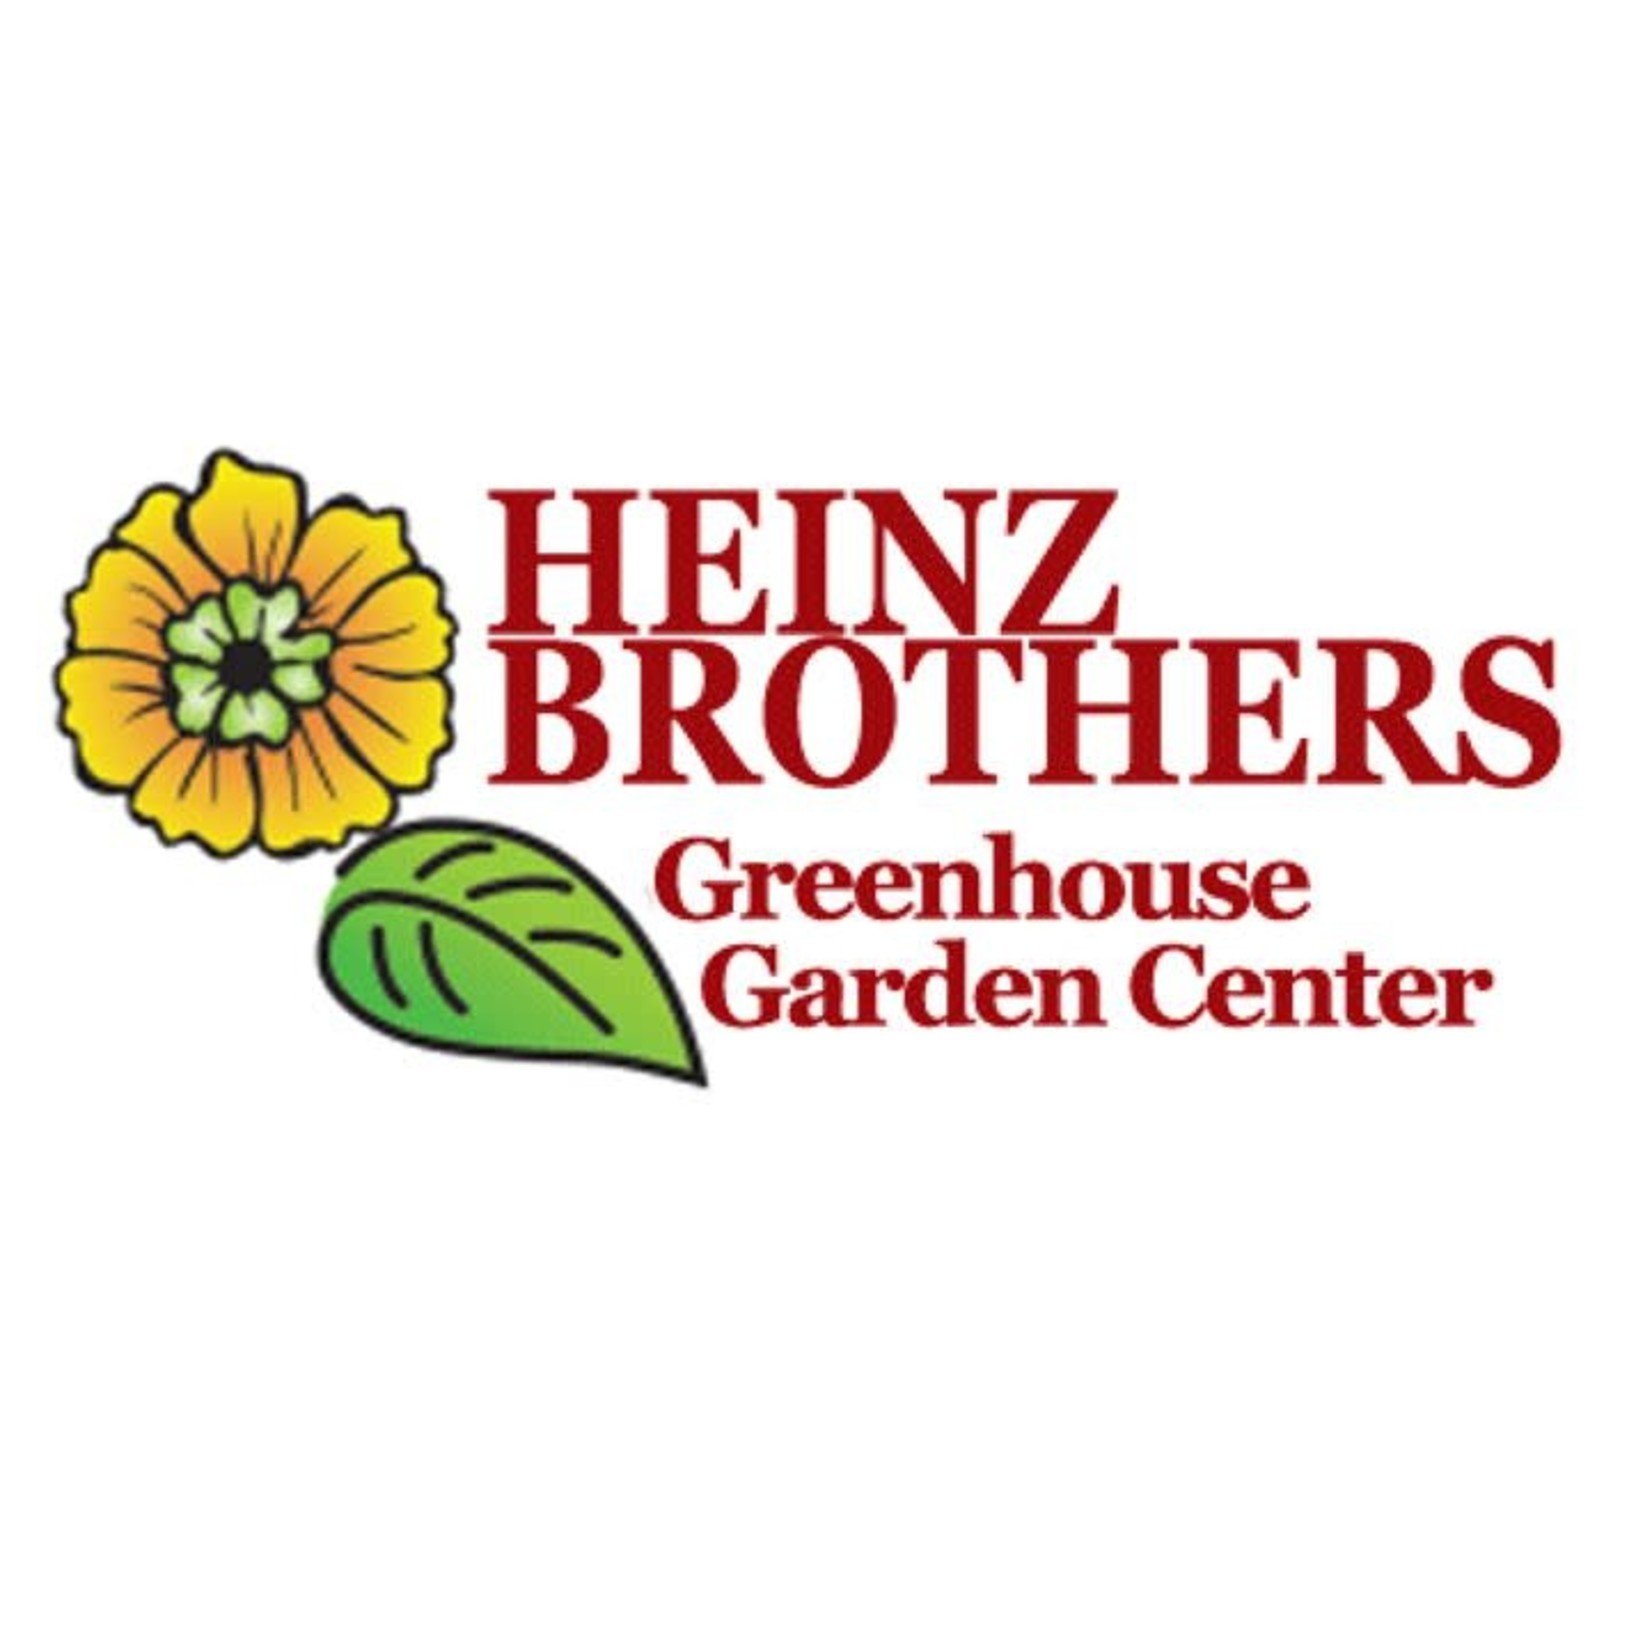 Heinz Brothers Greenhouse-Saint Charles Heinz Brothers Greenhouse-Saint Charles $20.00 Merchandise Certificate